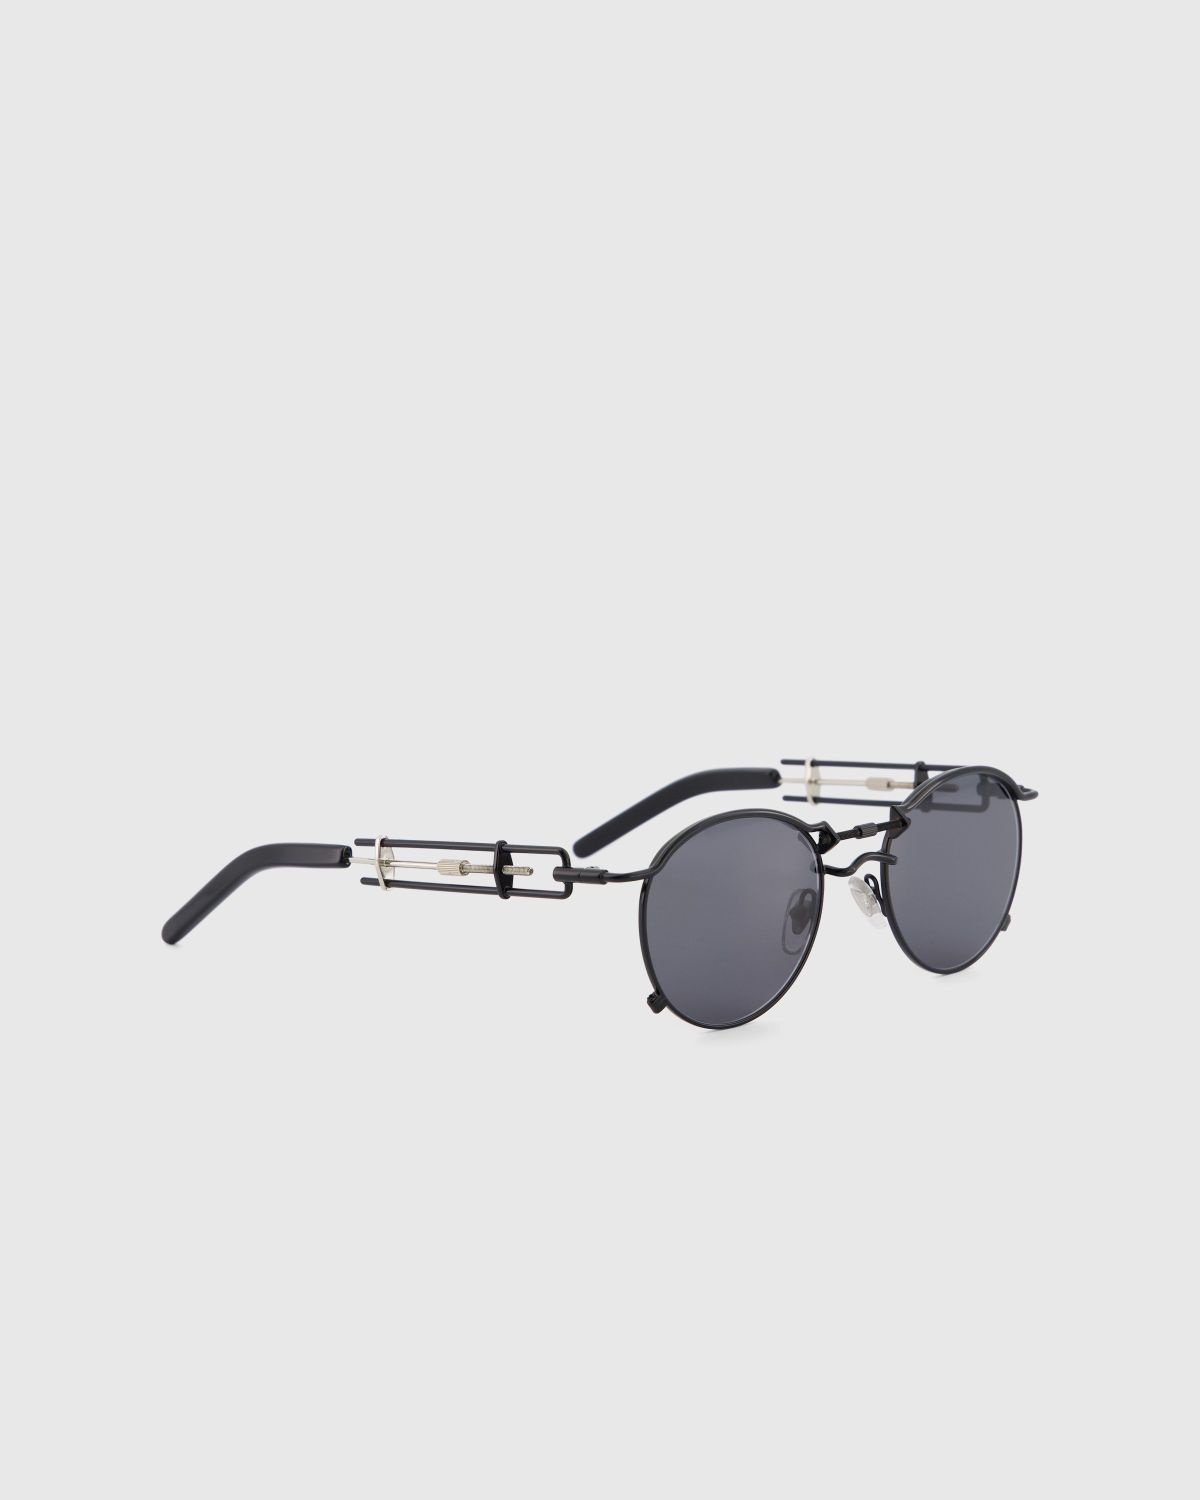 Jean Paul Gaultier x Burna Boy – 56-0174 Pas De Vis Sunglasses Black - 2